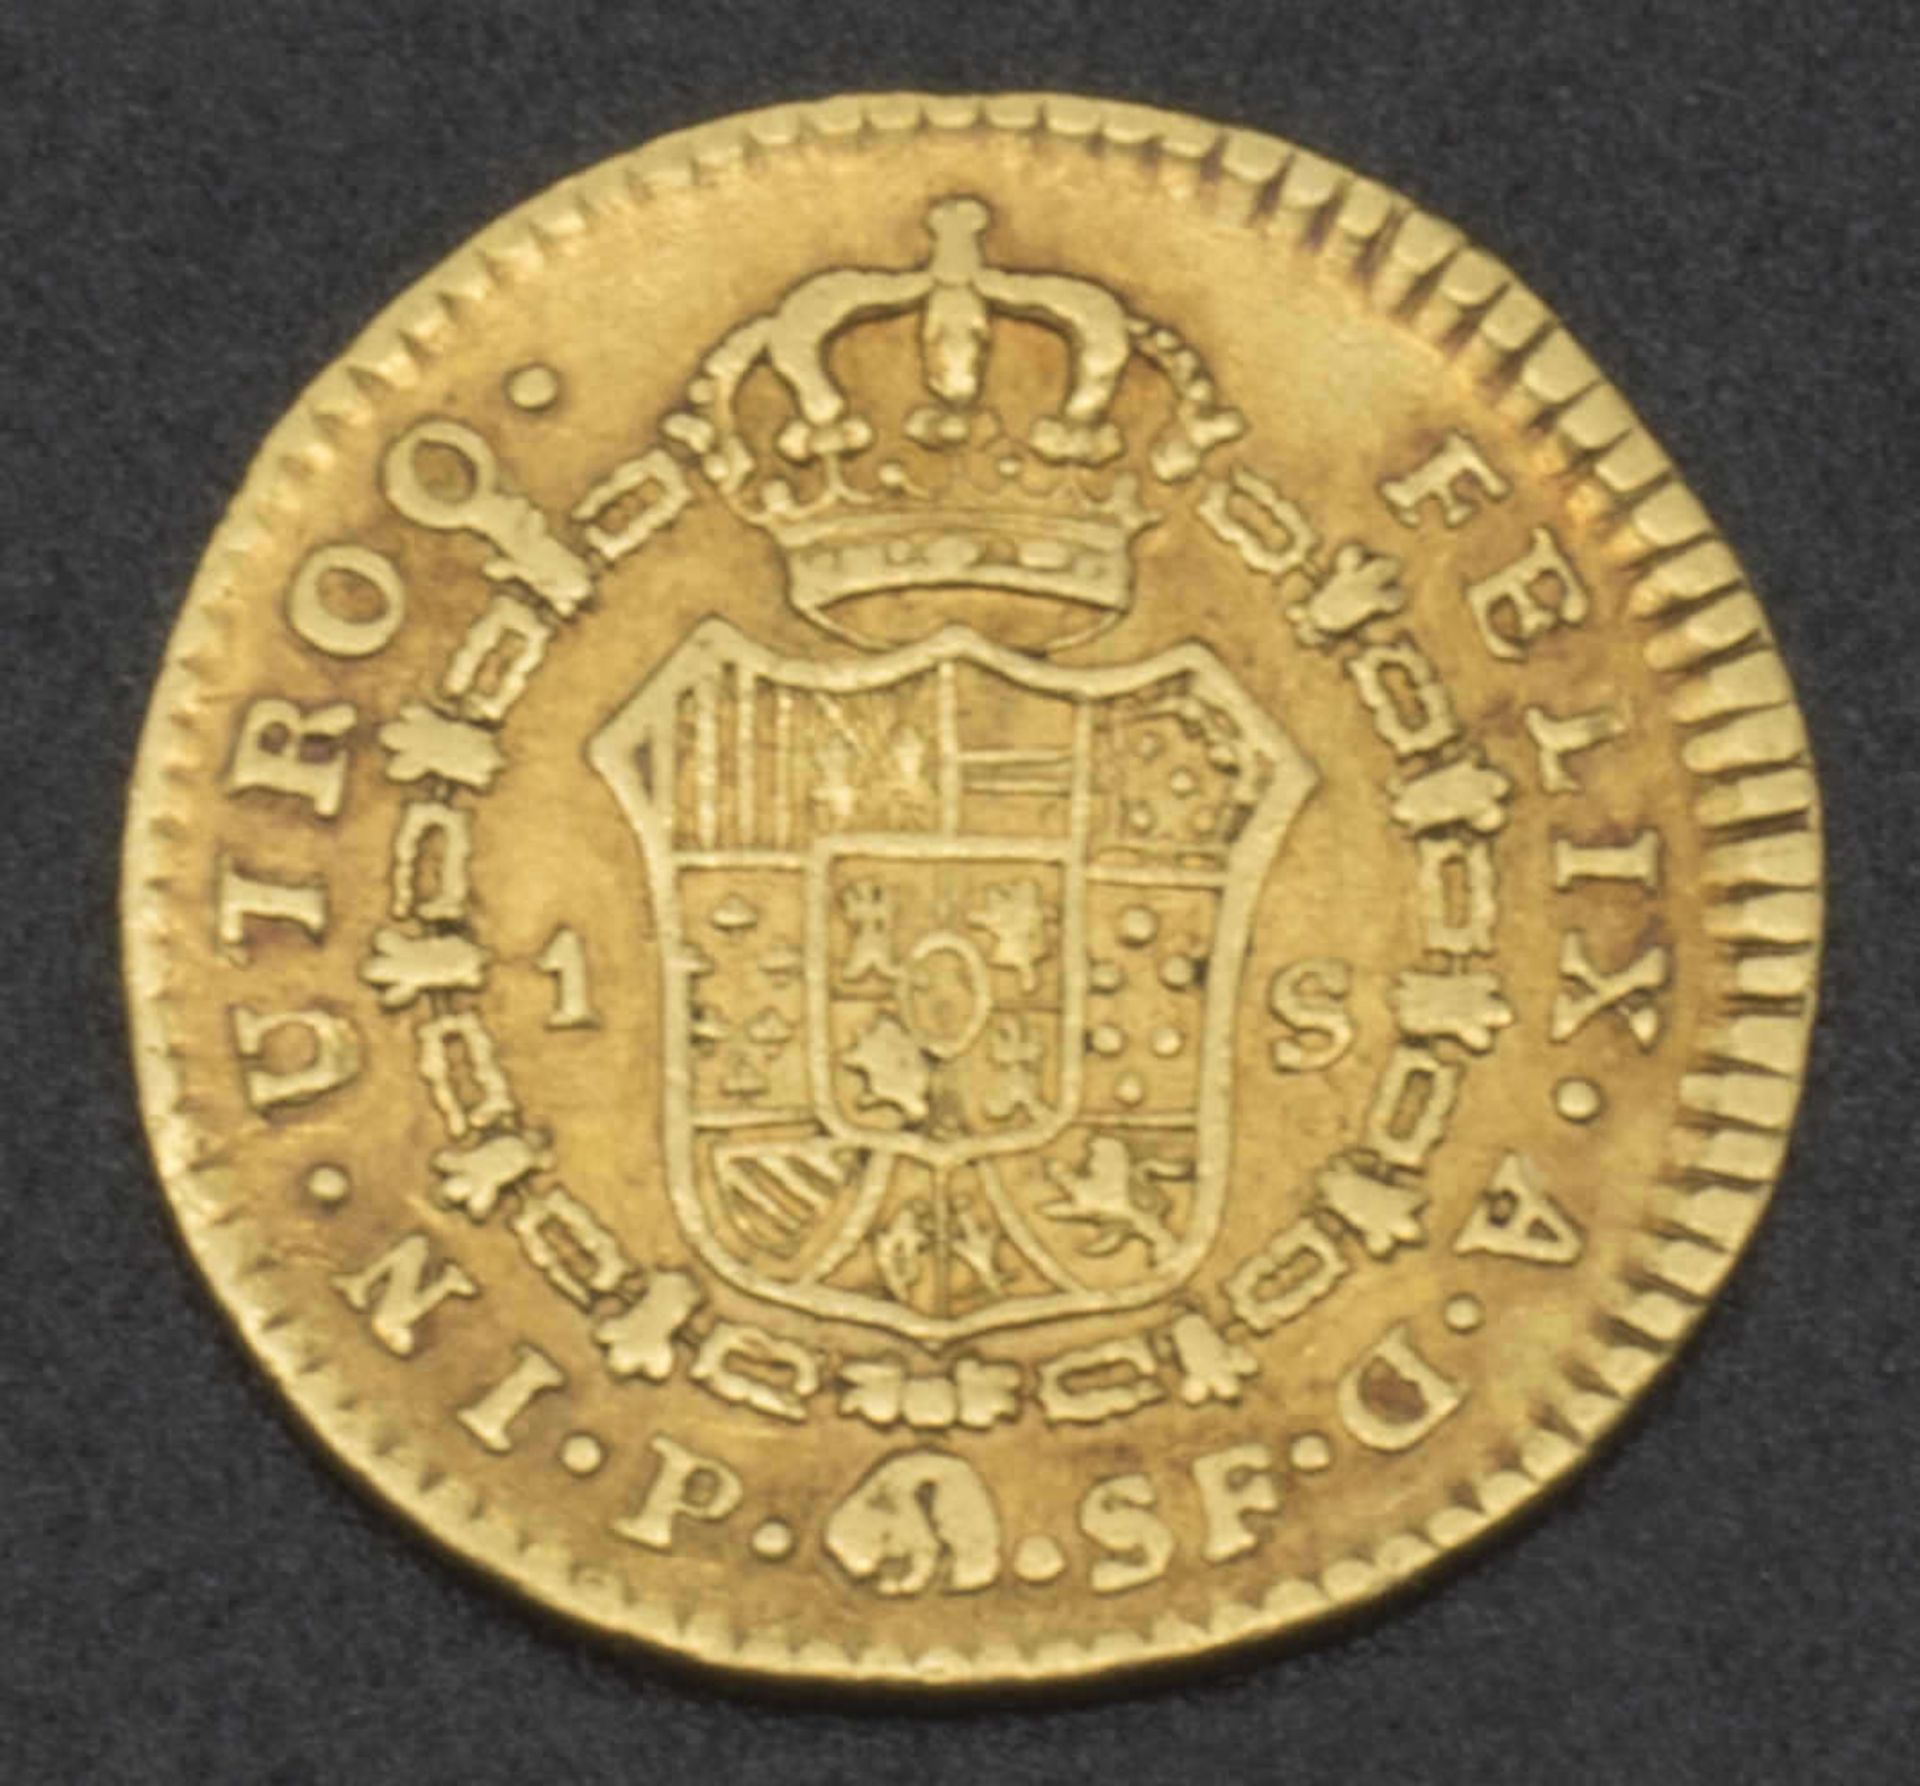 Goldmünze Kolumbien 1777 "Carlos III" 1777 PSF. Nr. KM 48.2. Zustand ss+vz. Gewicht ca. 3,34 g, - Bild 2 aus 2